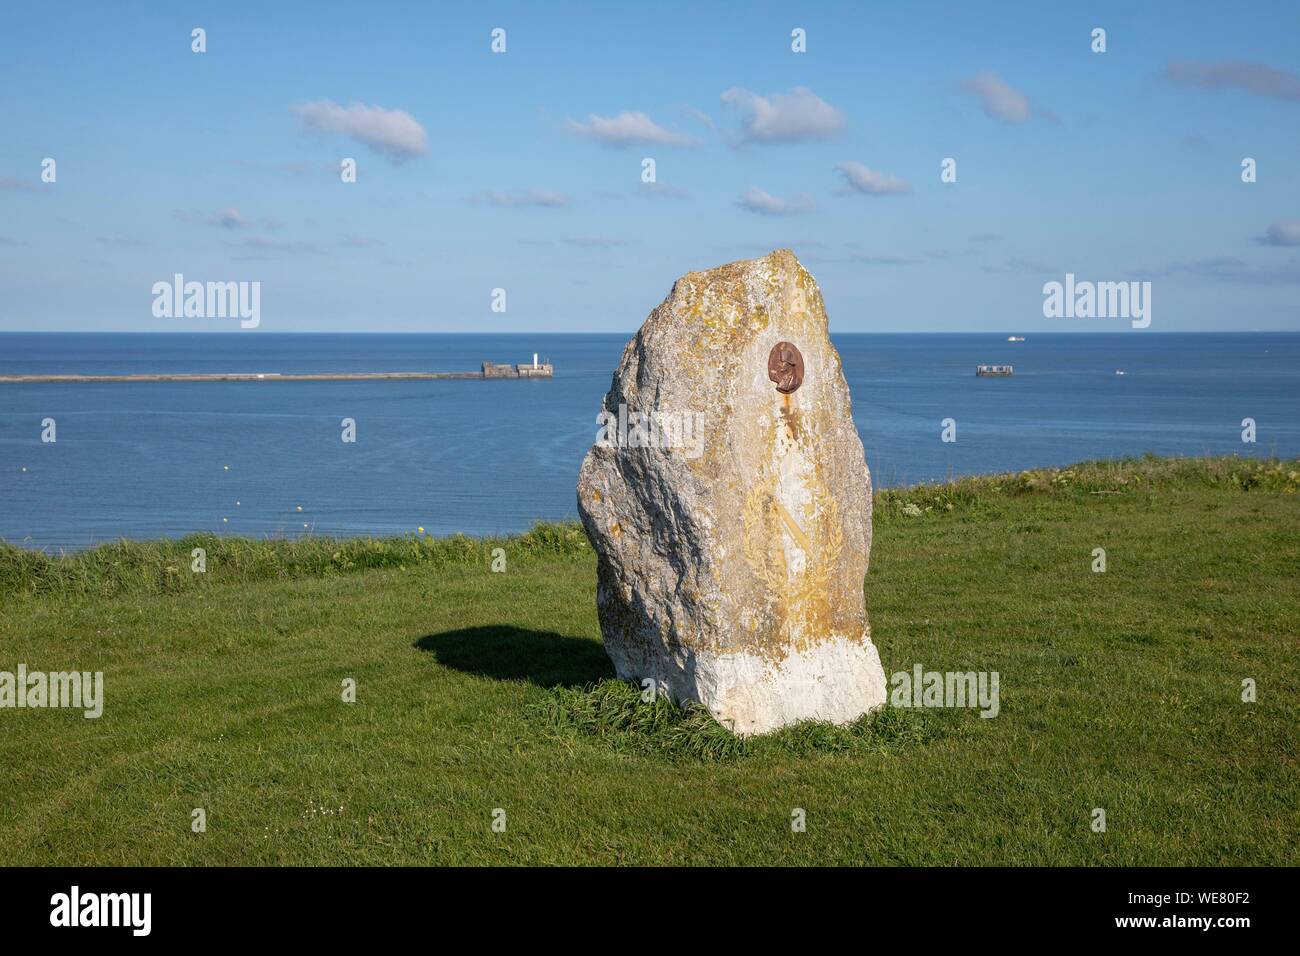 Francia, Pas de Calais, Boulogne sur Mer, Camp de Boulogne, pietra con l'immagine di Napoleone Foto Stock